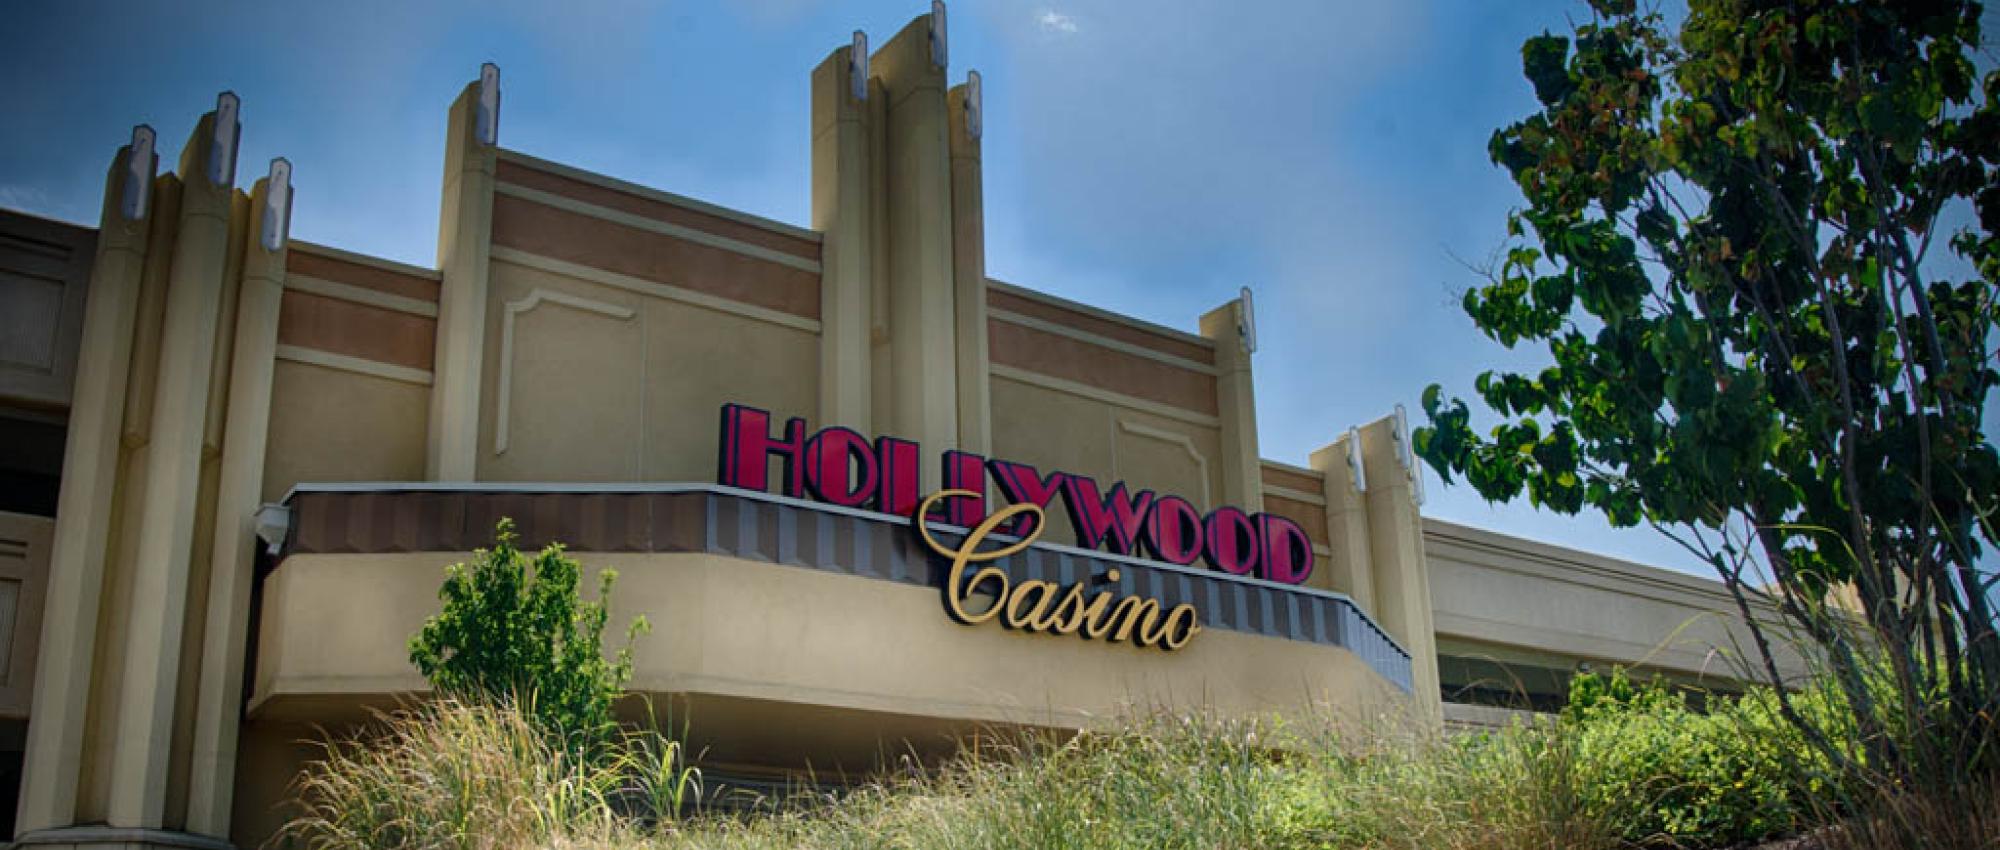 hollywood casino aurora steakhouse